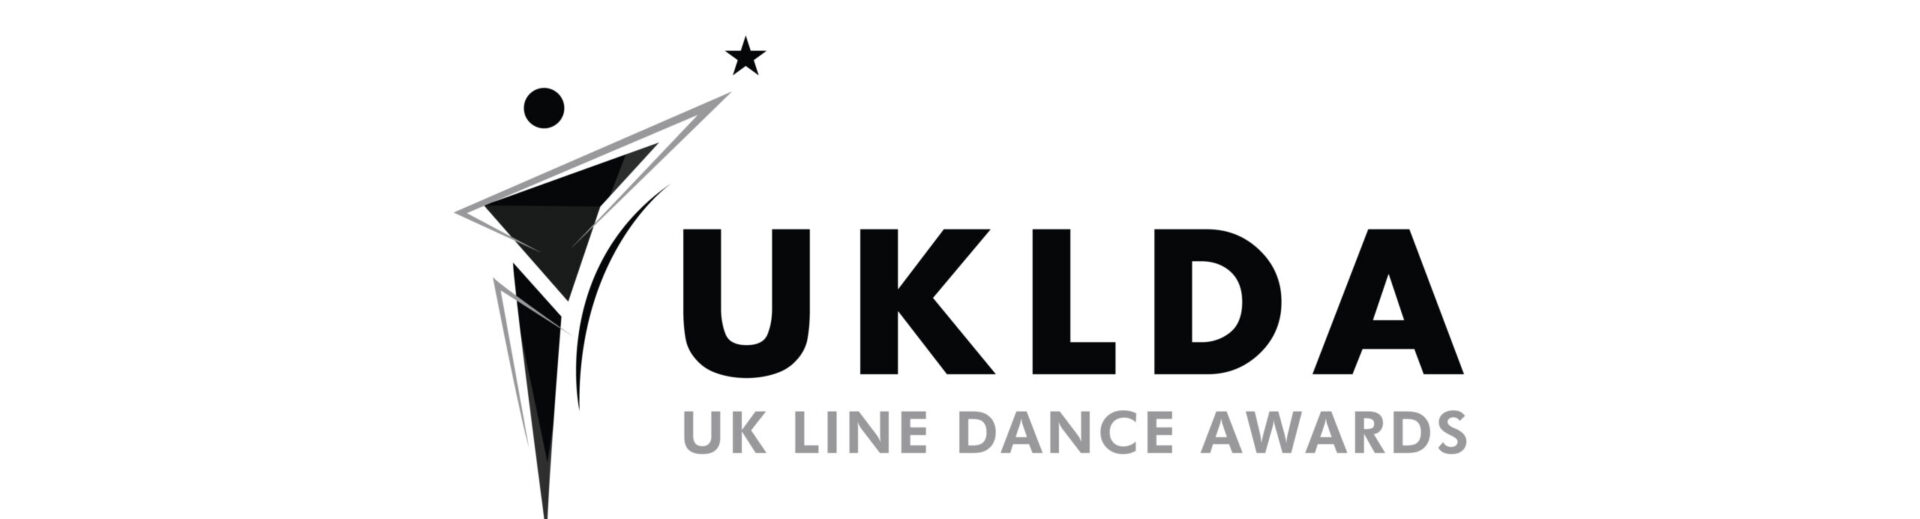 UK Line Dance Awards